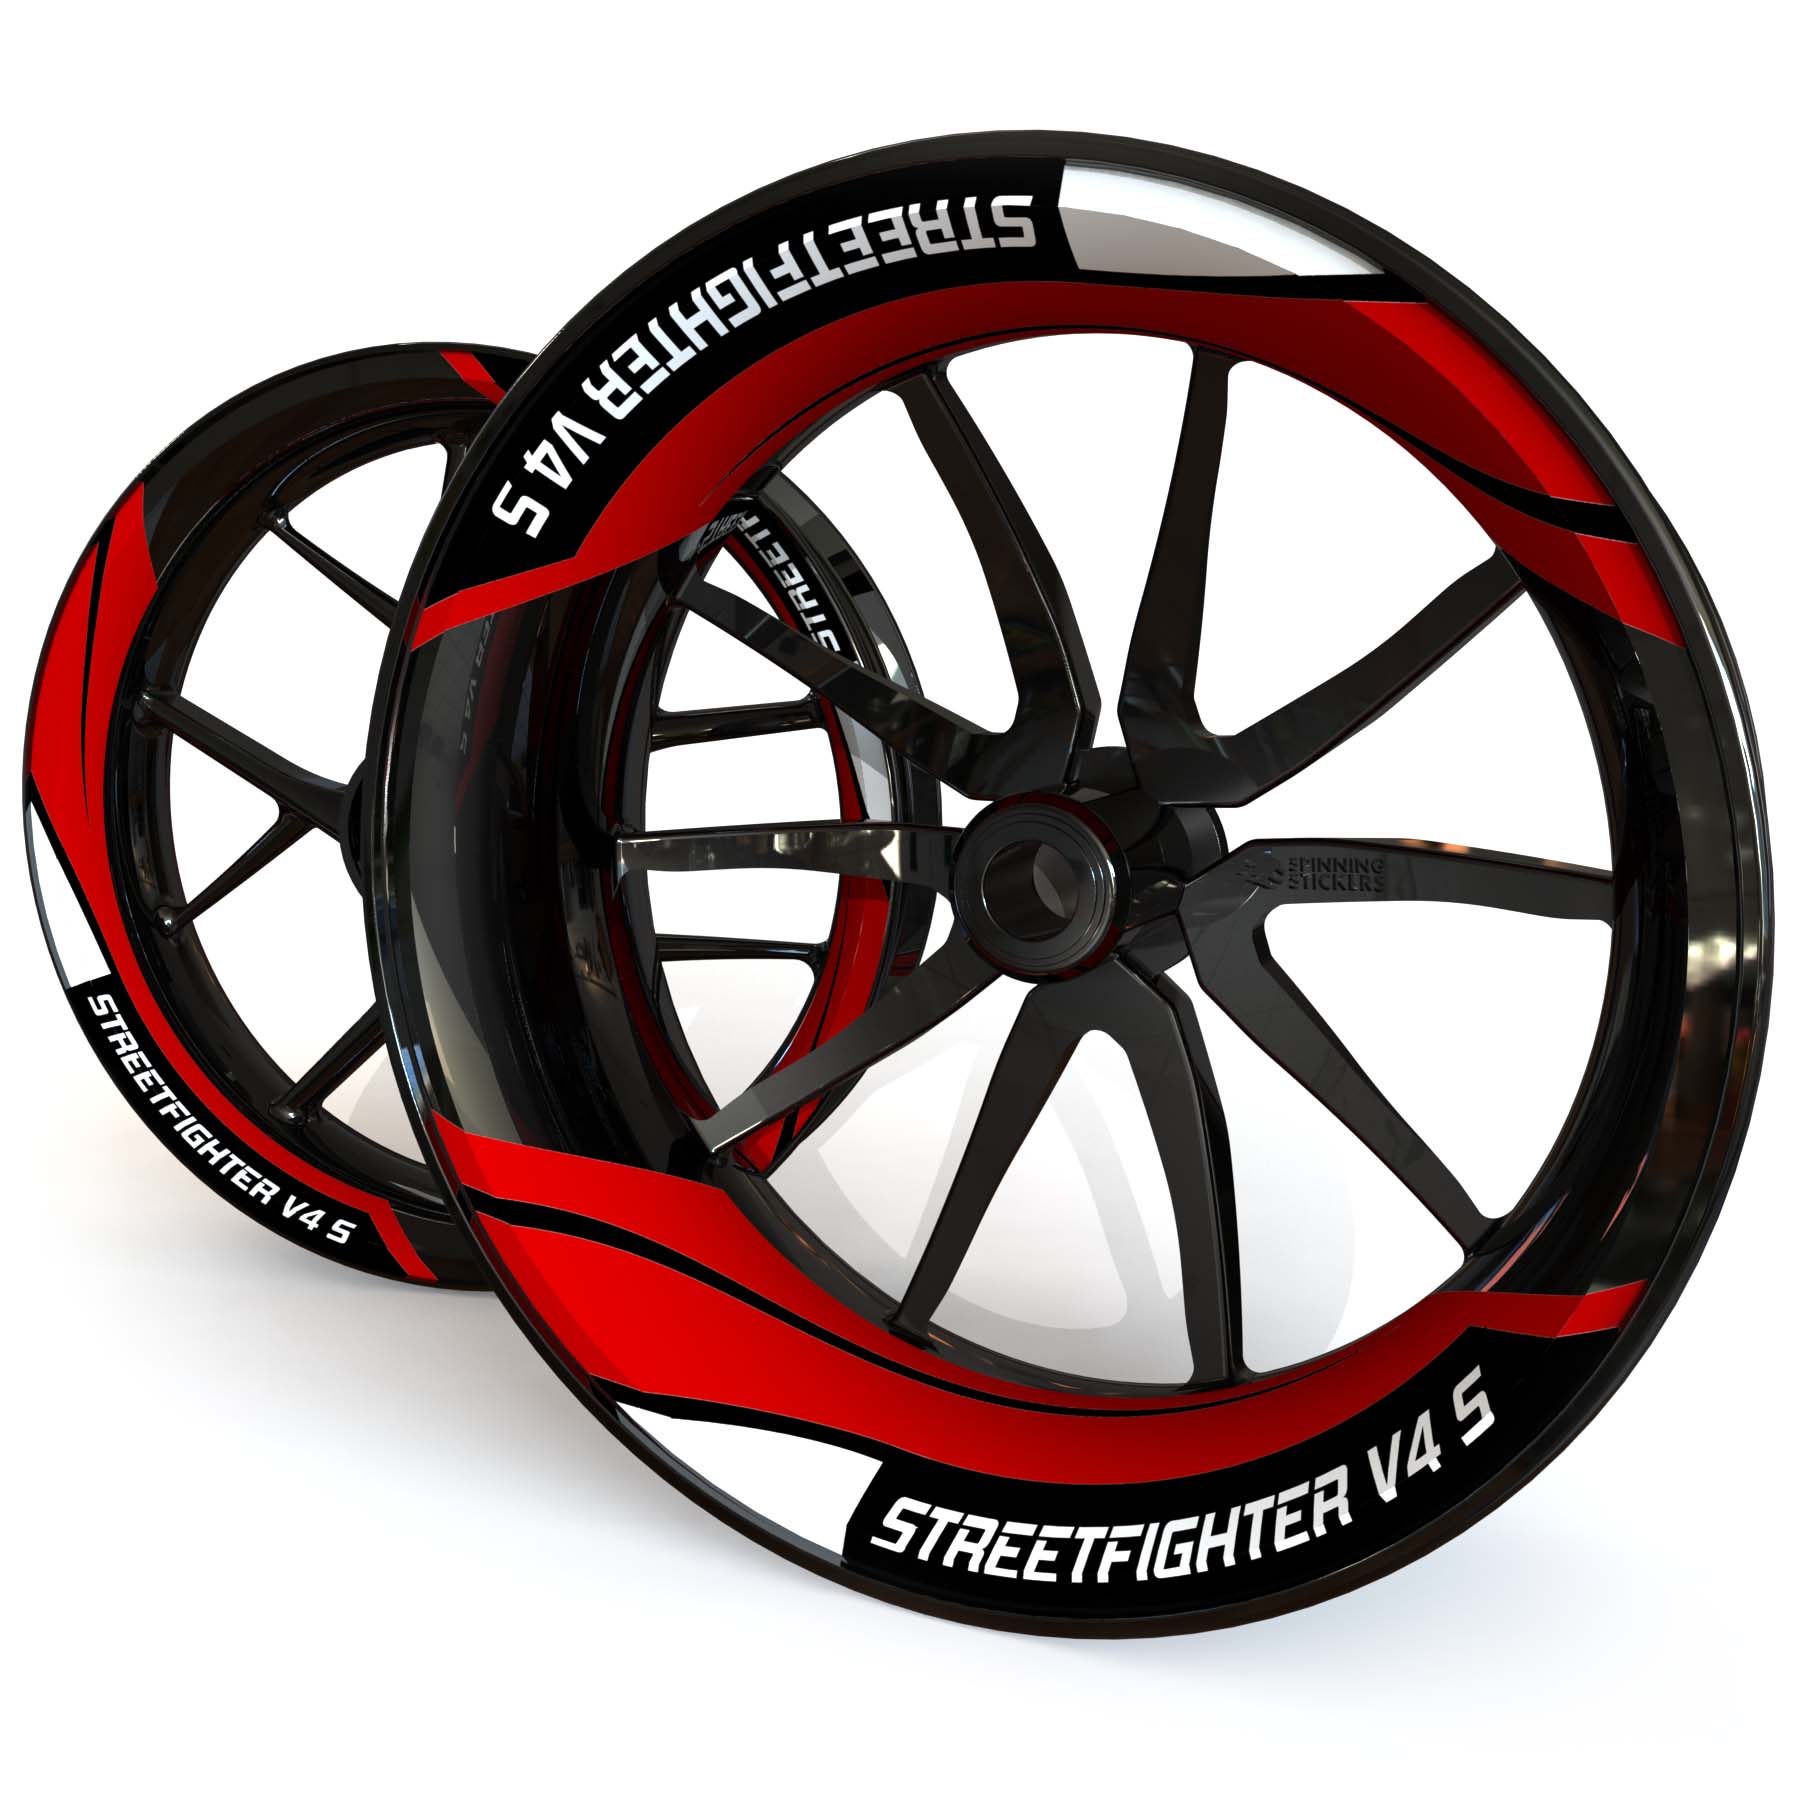 Ducati Streetfighter V4S Wheel Stickers kit - Two Piece Design